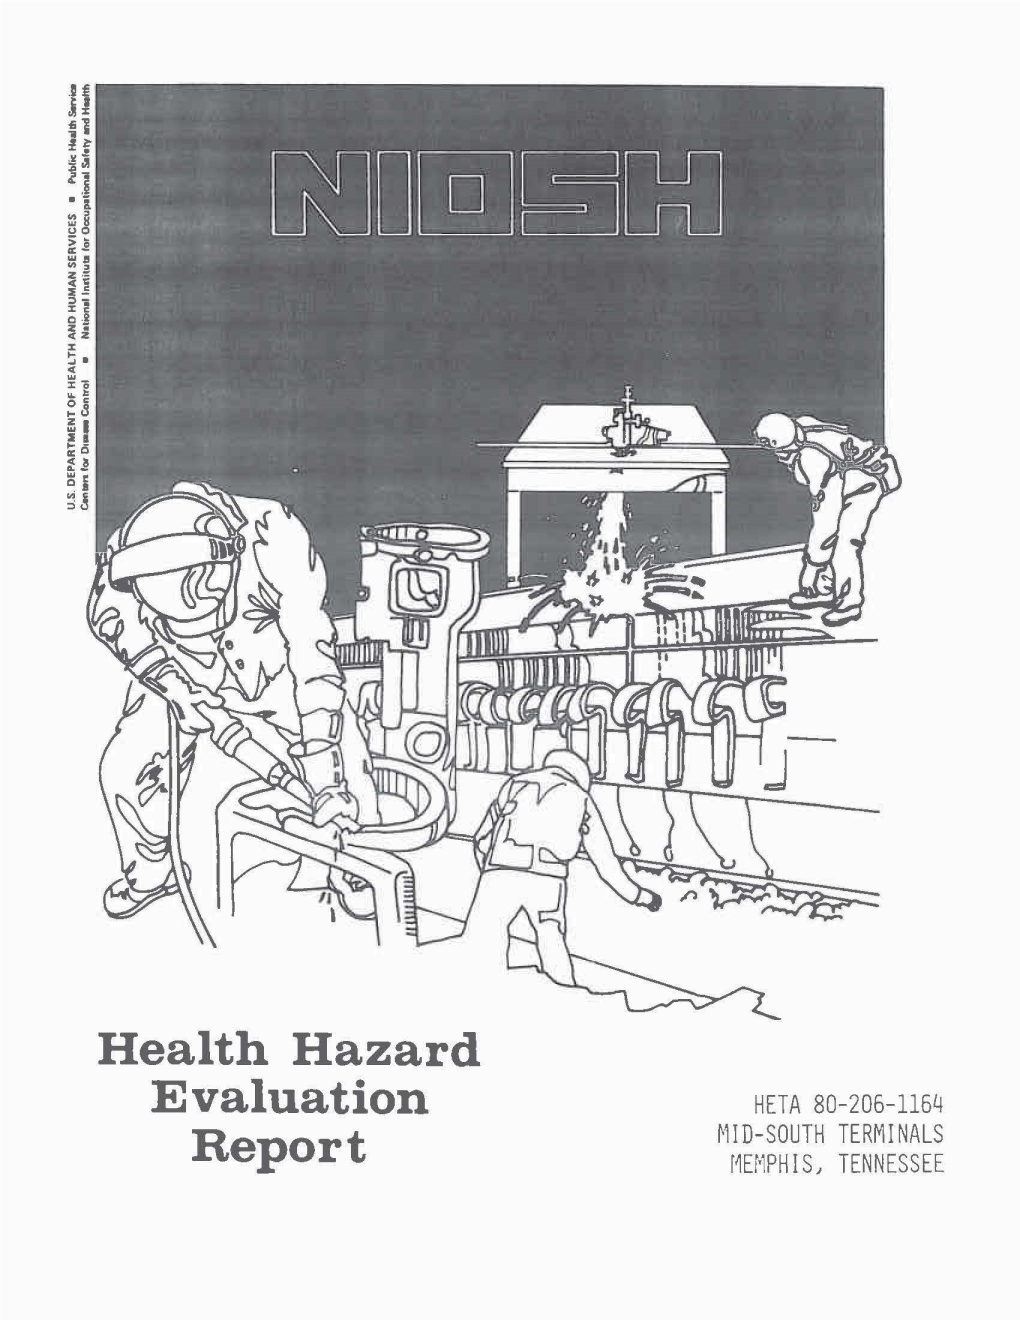 Health Hazard Evaluation Report 80-206-1164